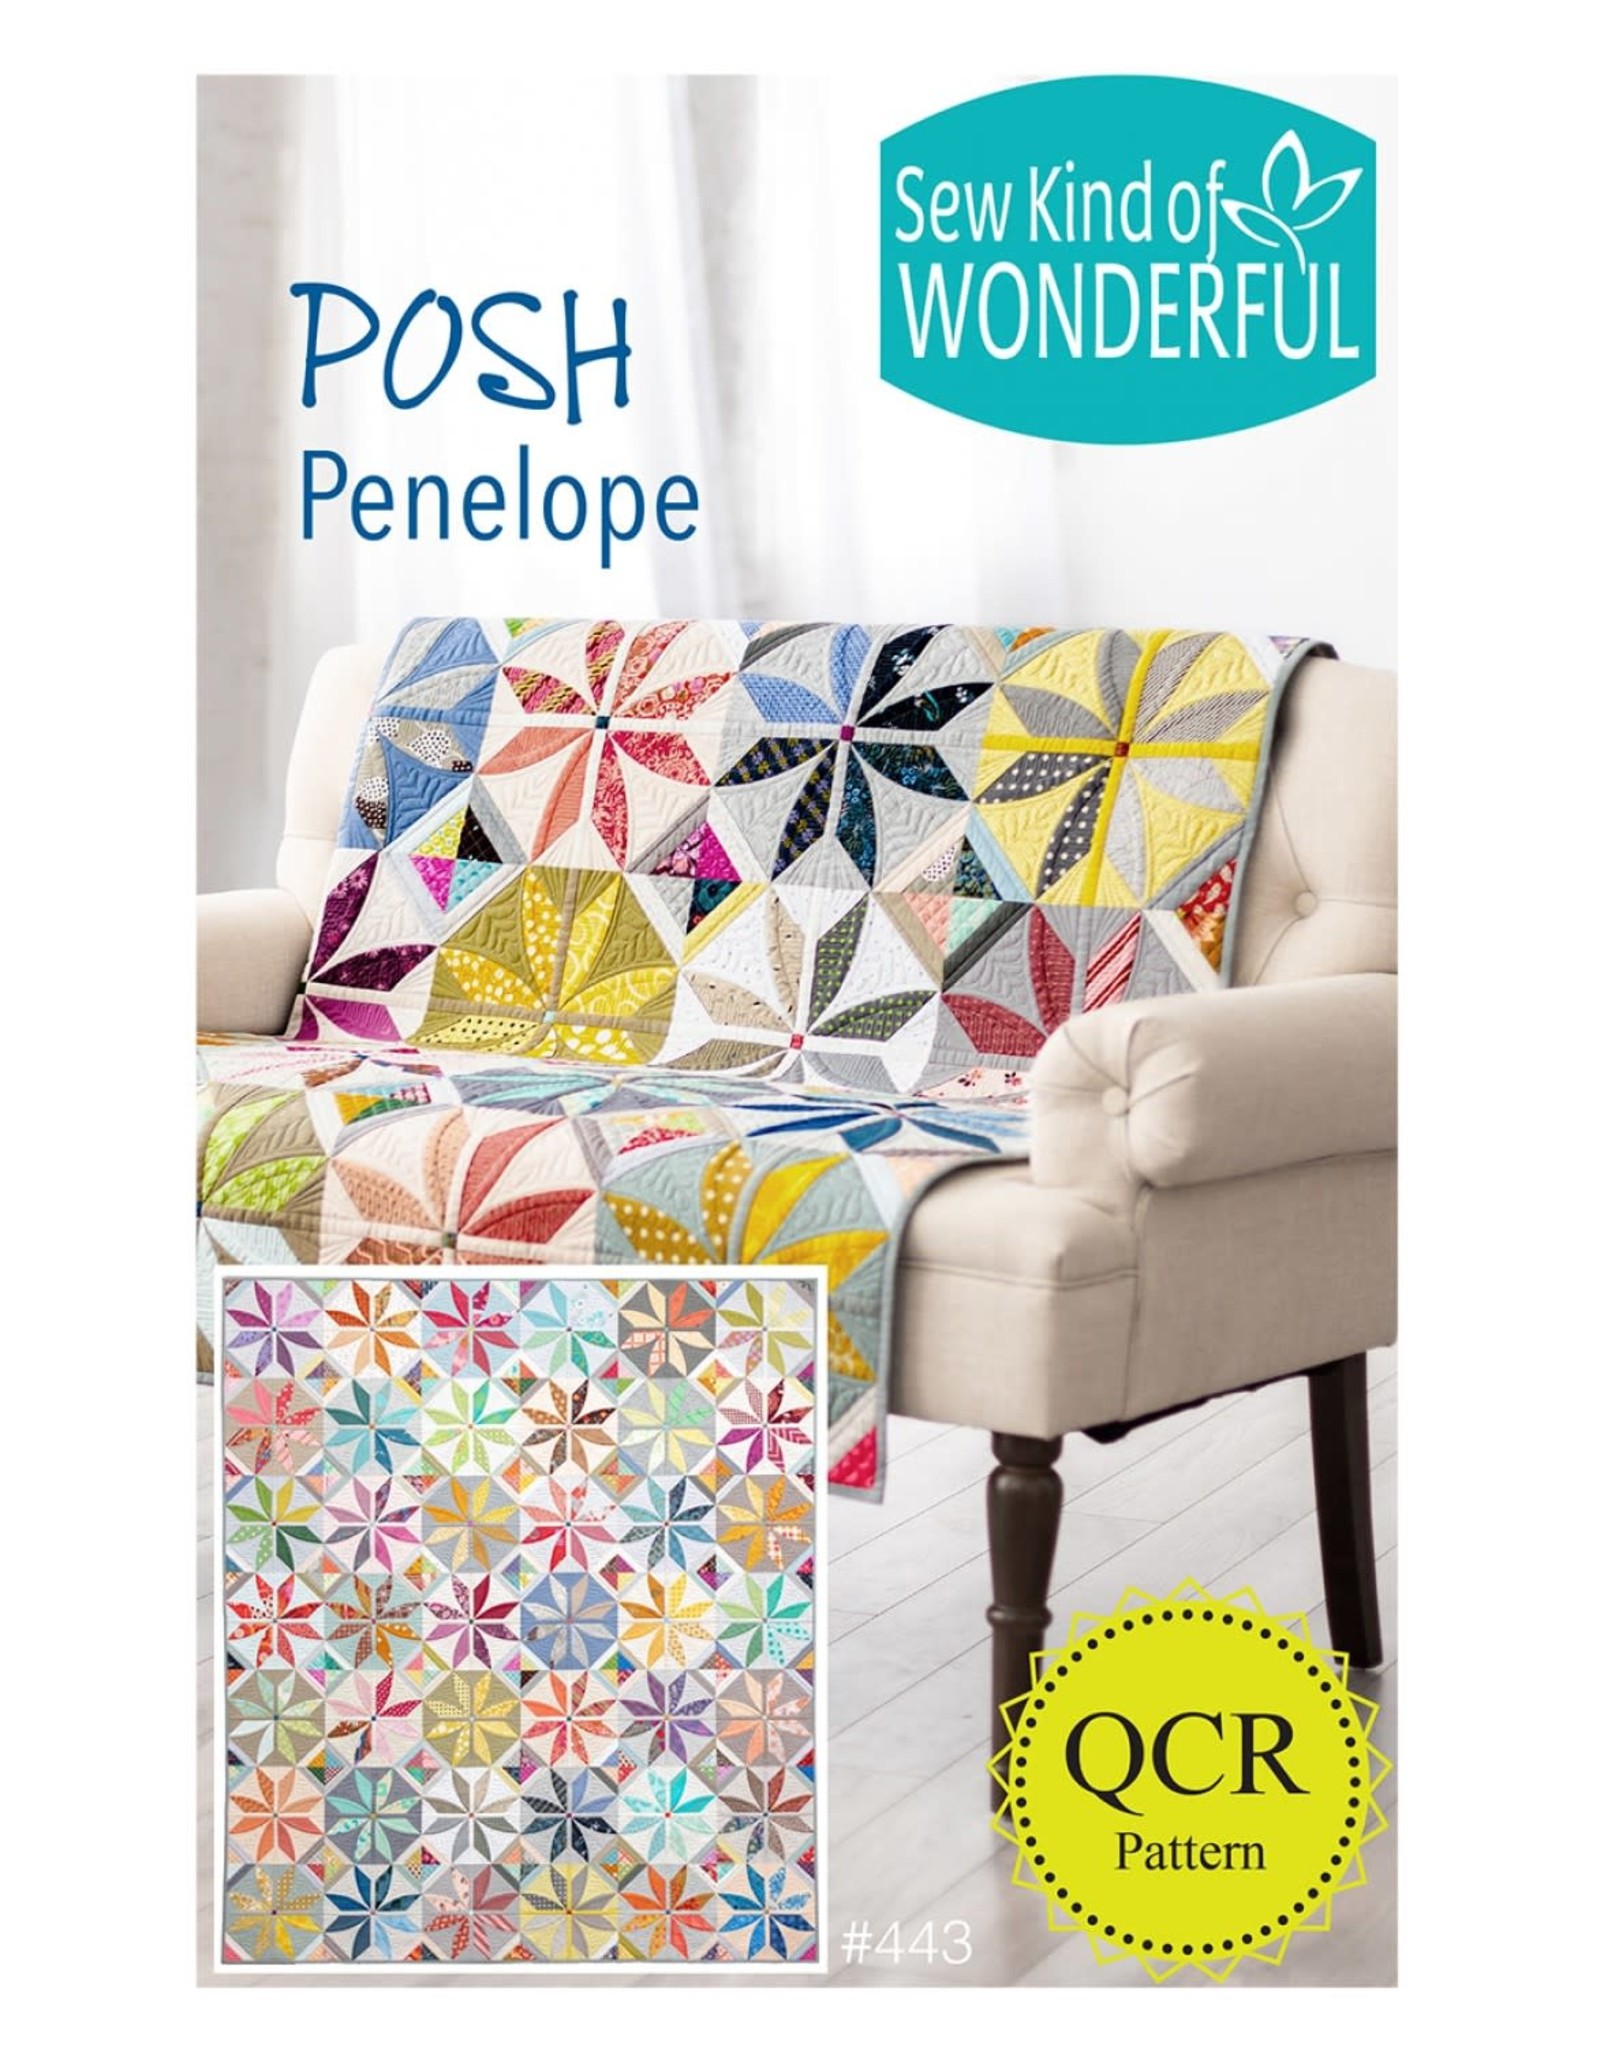 Sew Kind of Wonderful Sew Kind of Wonderful pattern - Posh Penelope